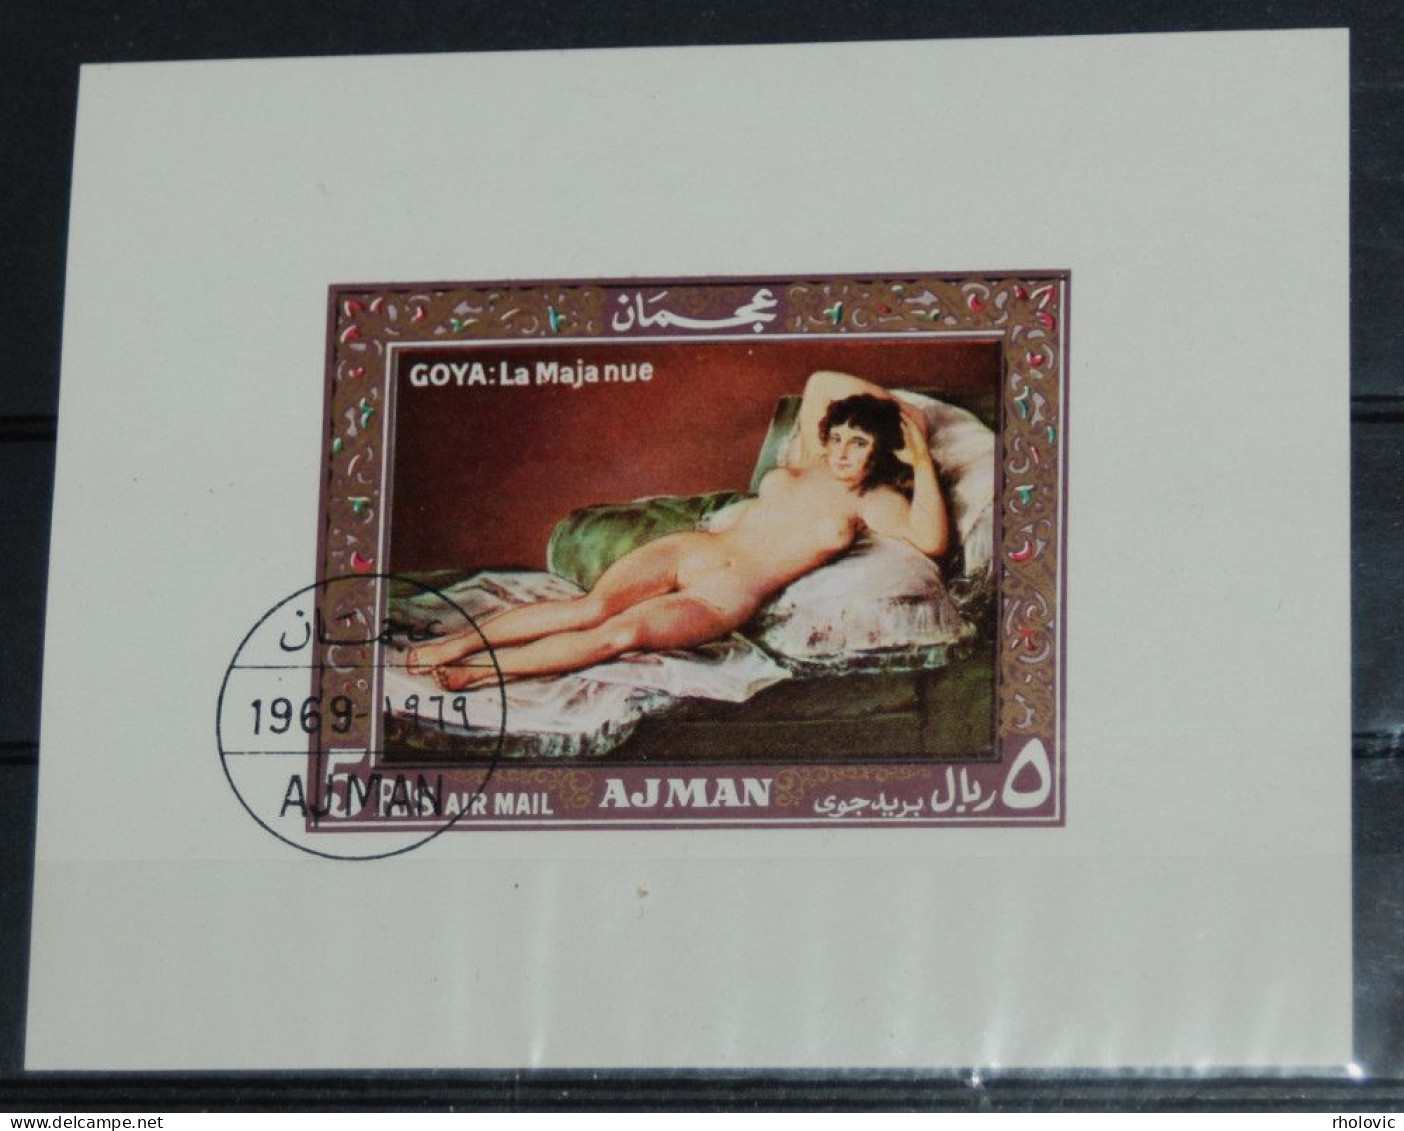 AJMAN 1969, Paintings, Art, Nude, Goya, Imperf, Mi #B120, Souvenir Sheet, Used - Aktmalerei